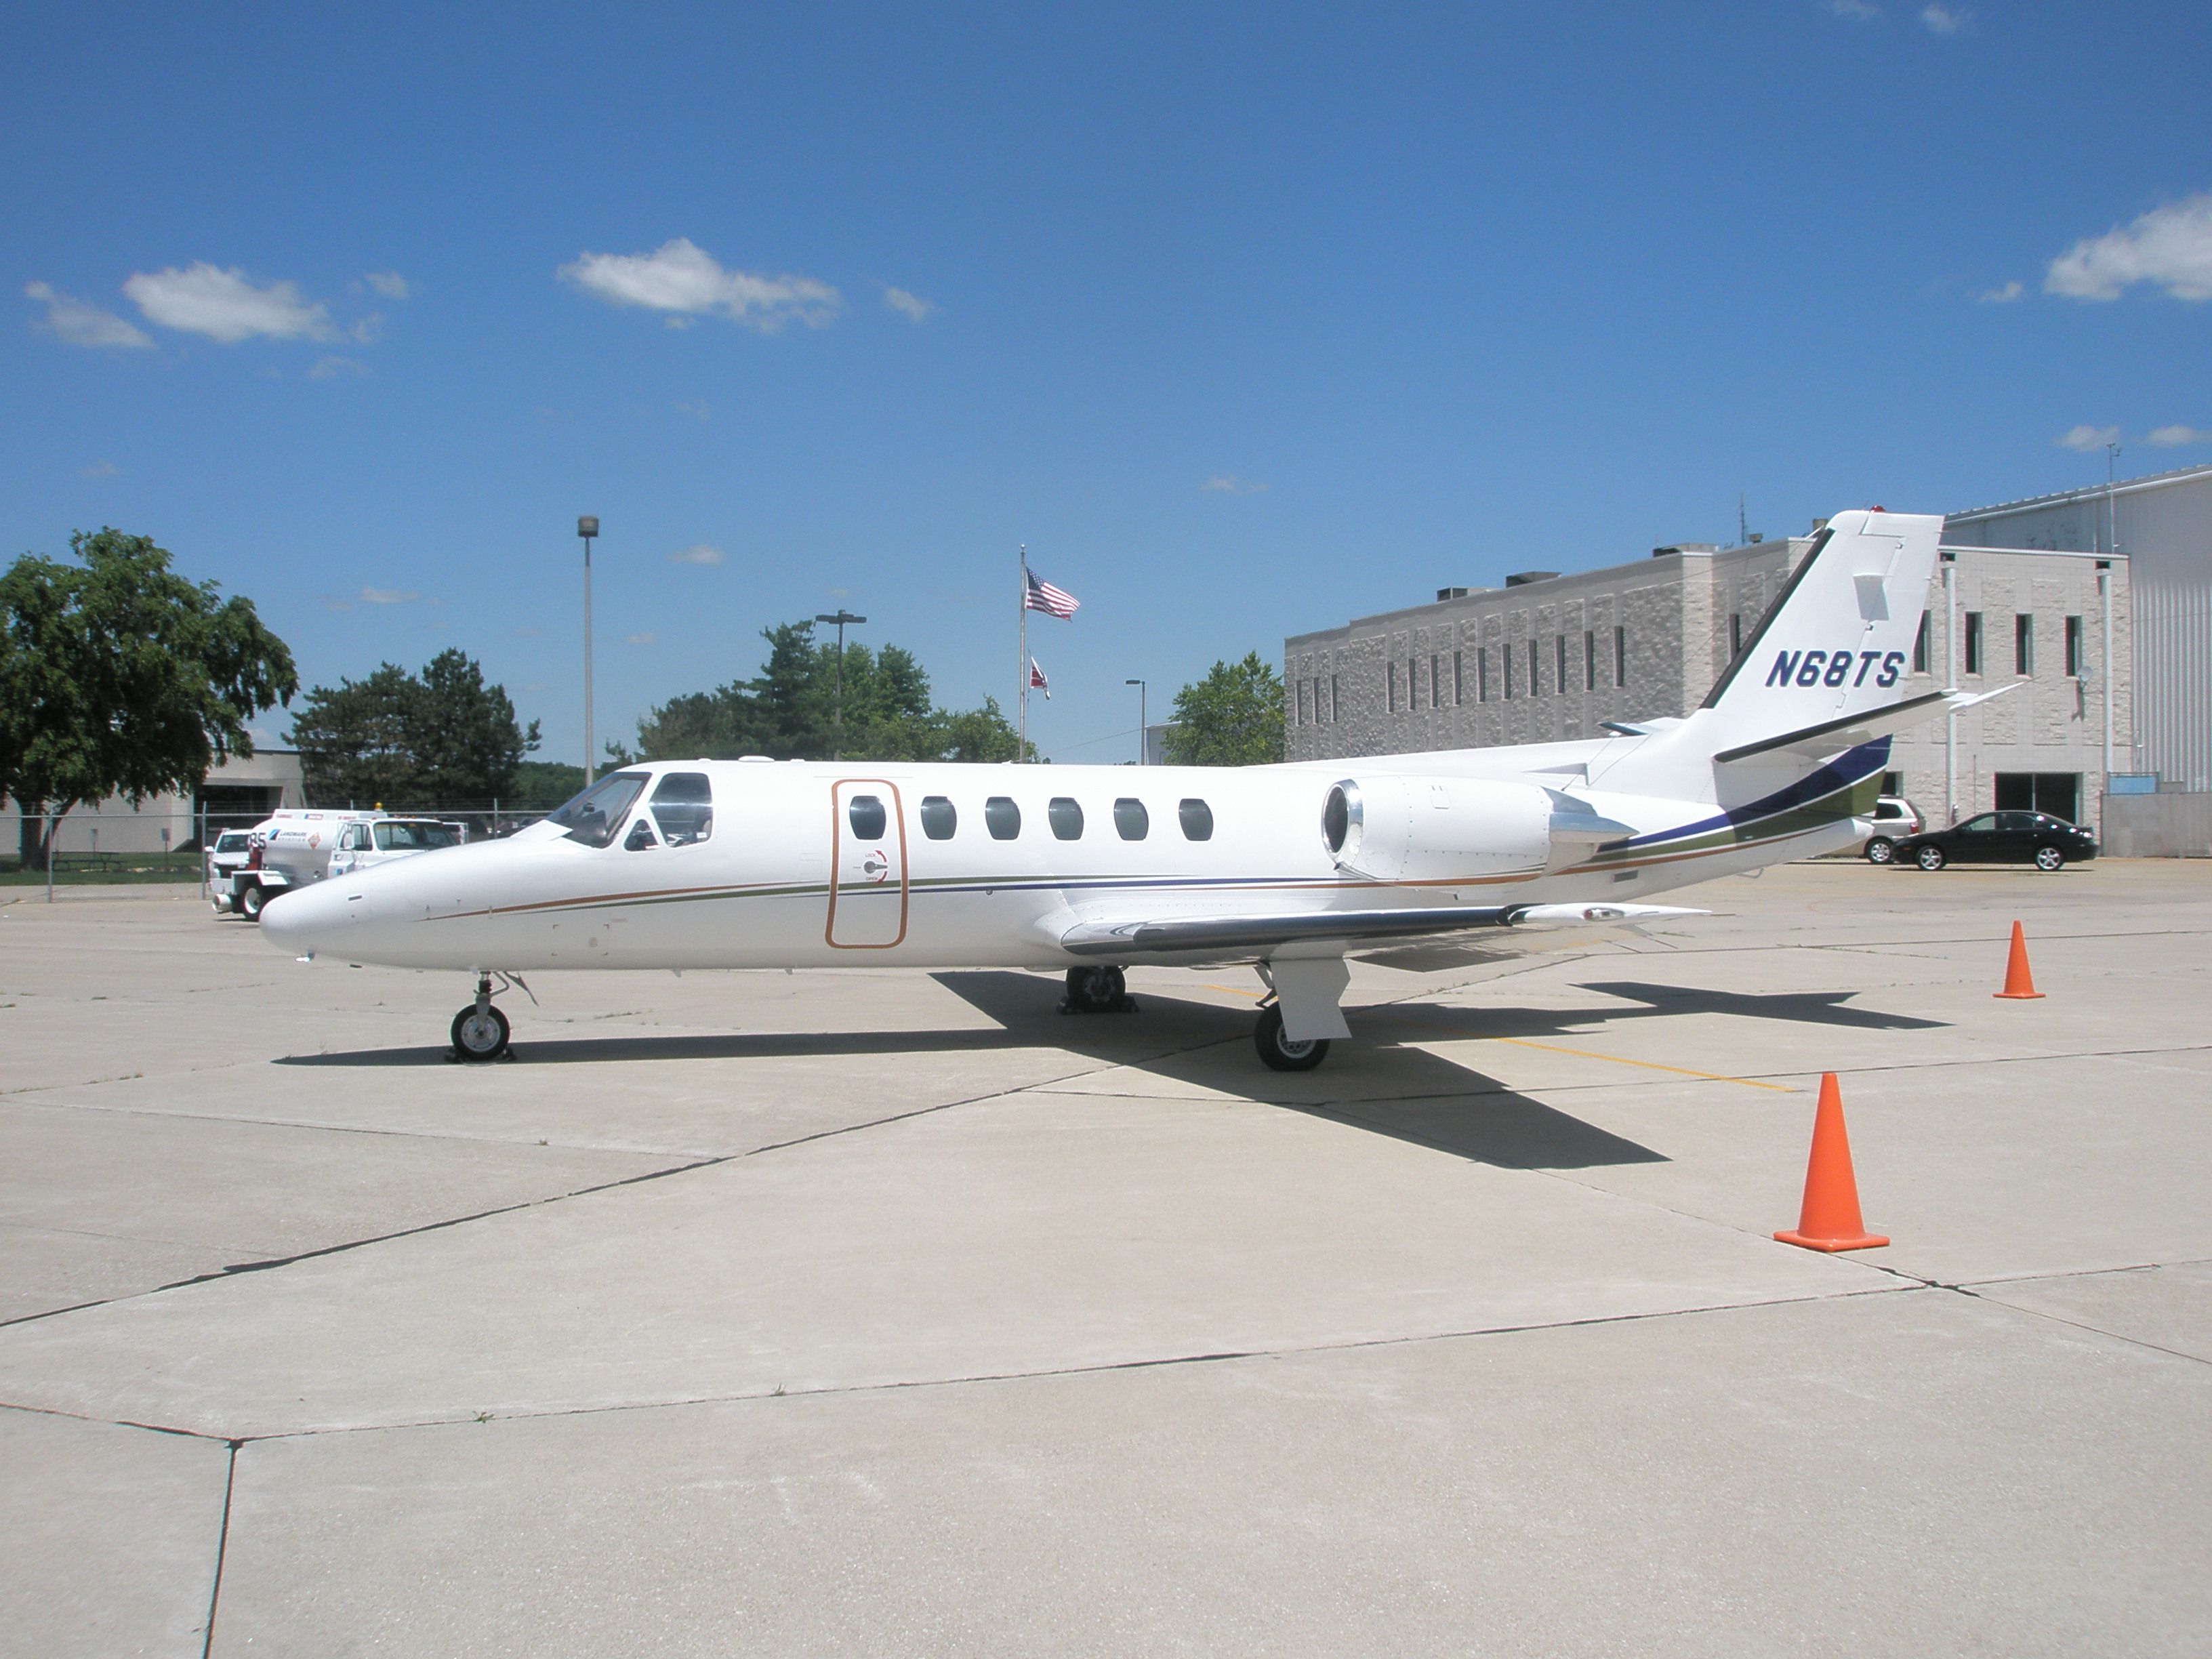 Cessna Citation II (N68TS) - Seen sitting at Landmark at SPI